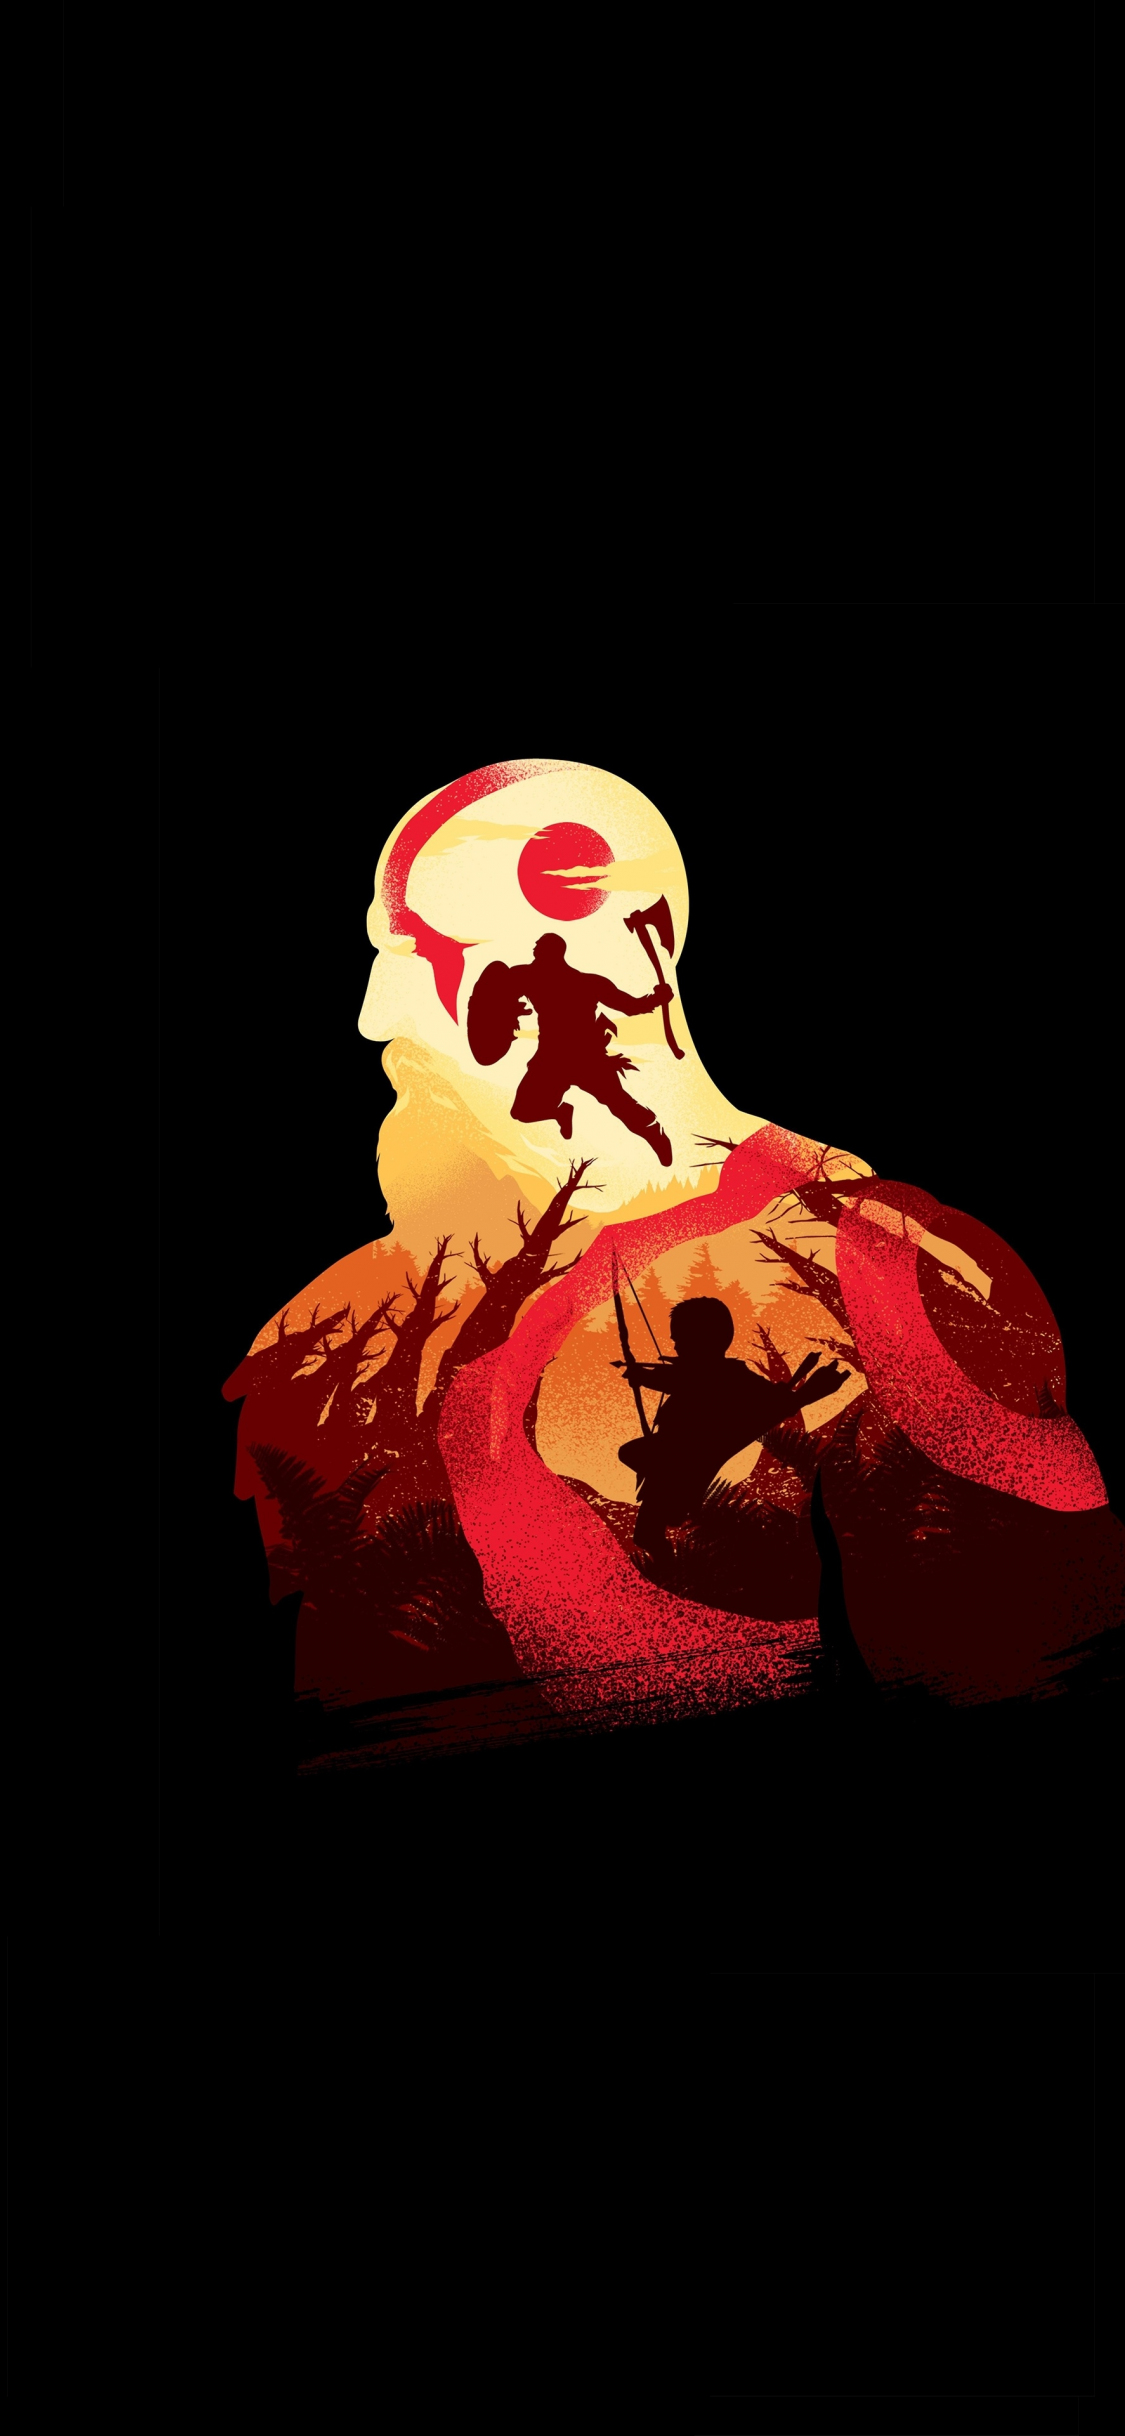 Kratos iPhone 11 Pro Max Wallpaper